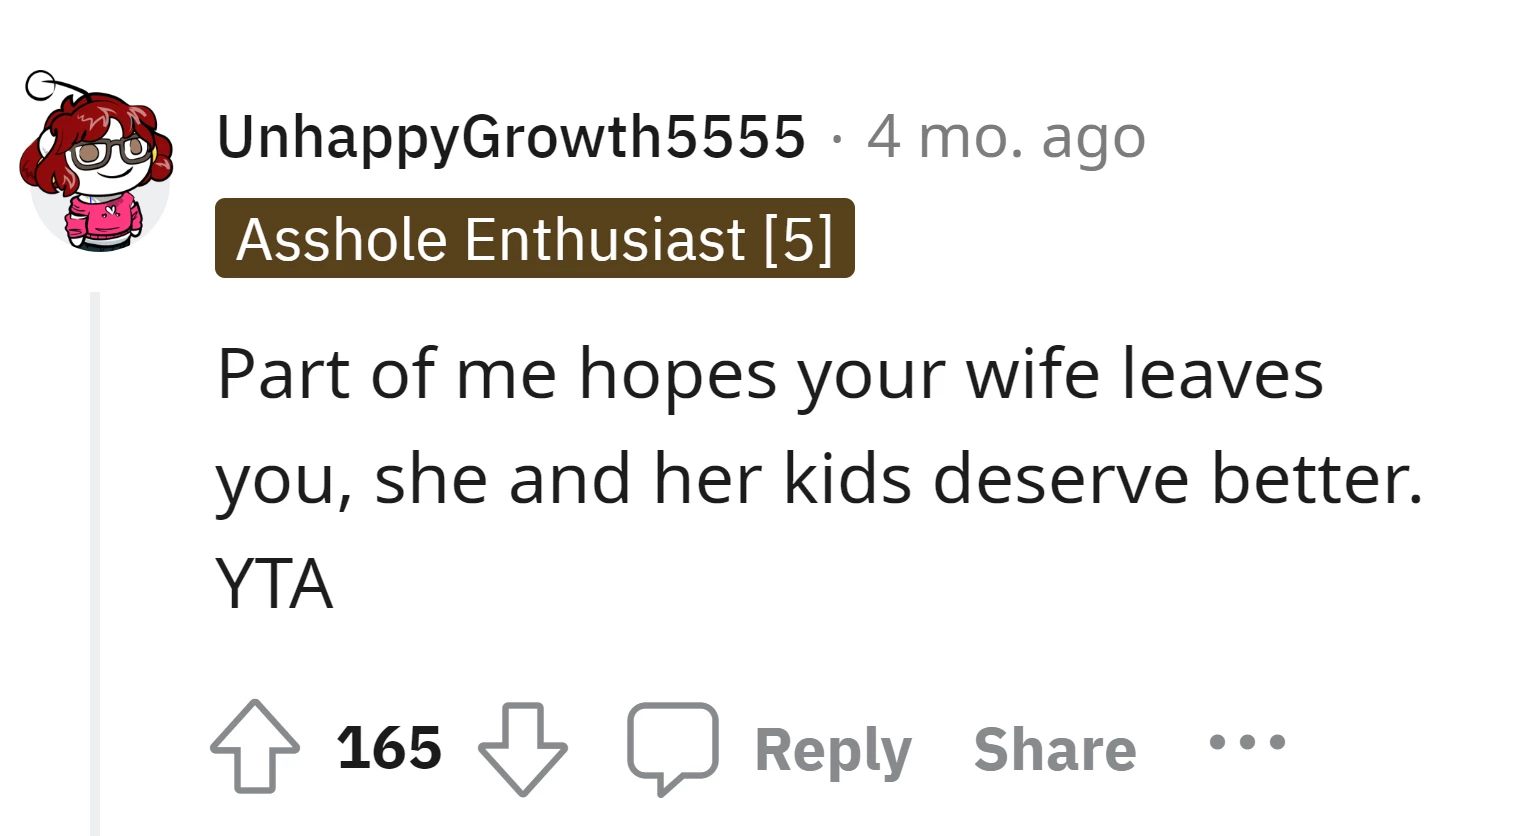 OP's wife and her children deserve better